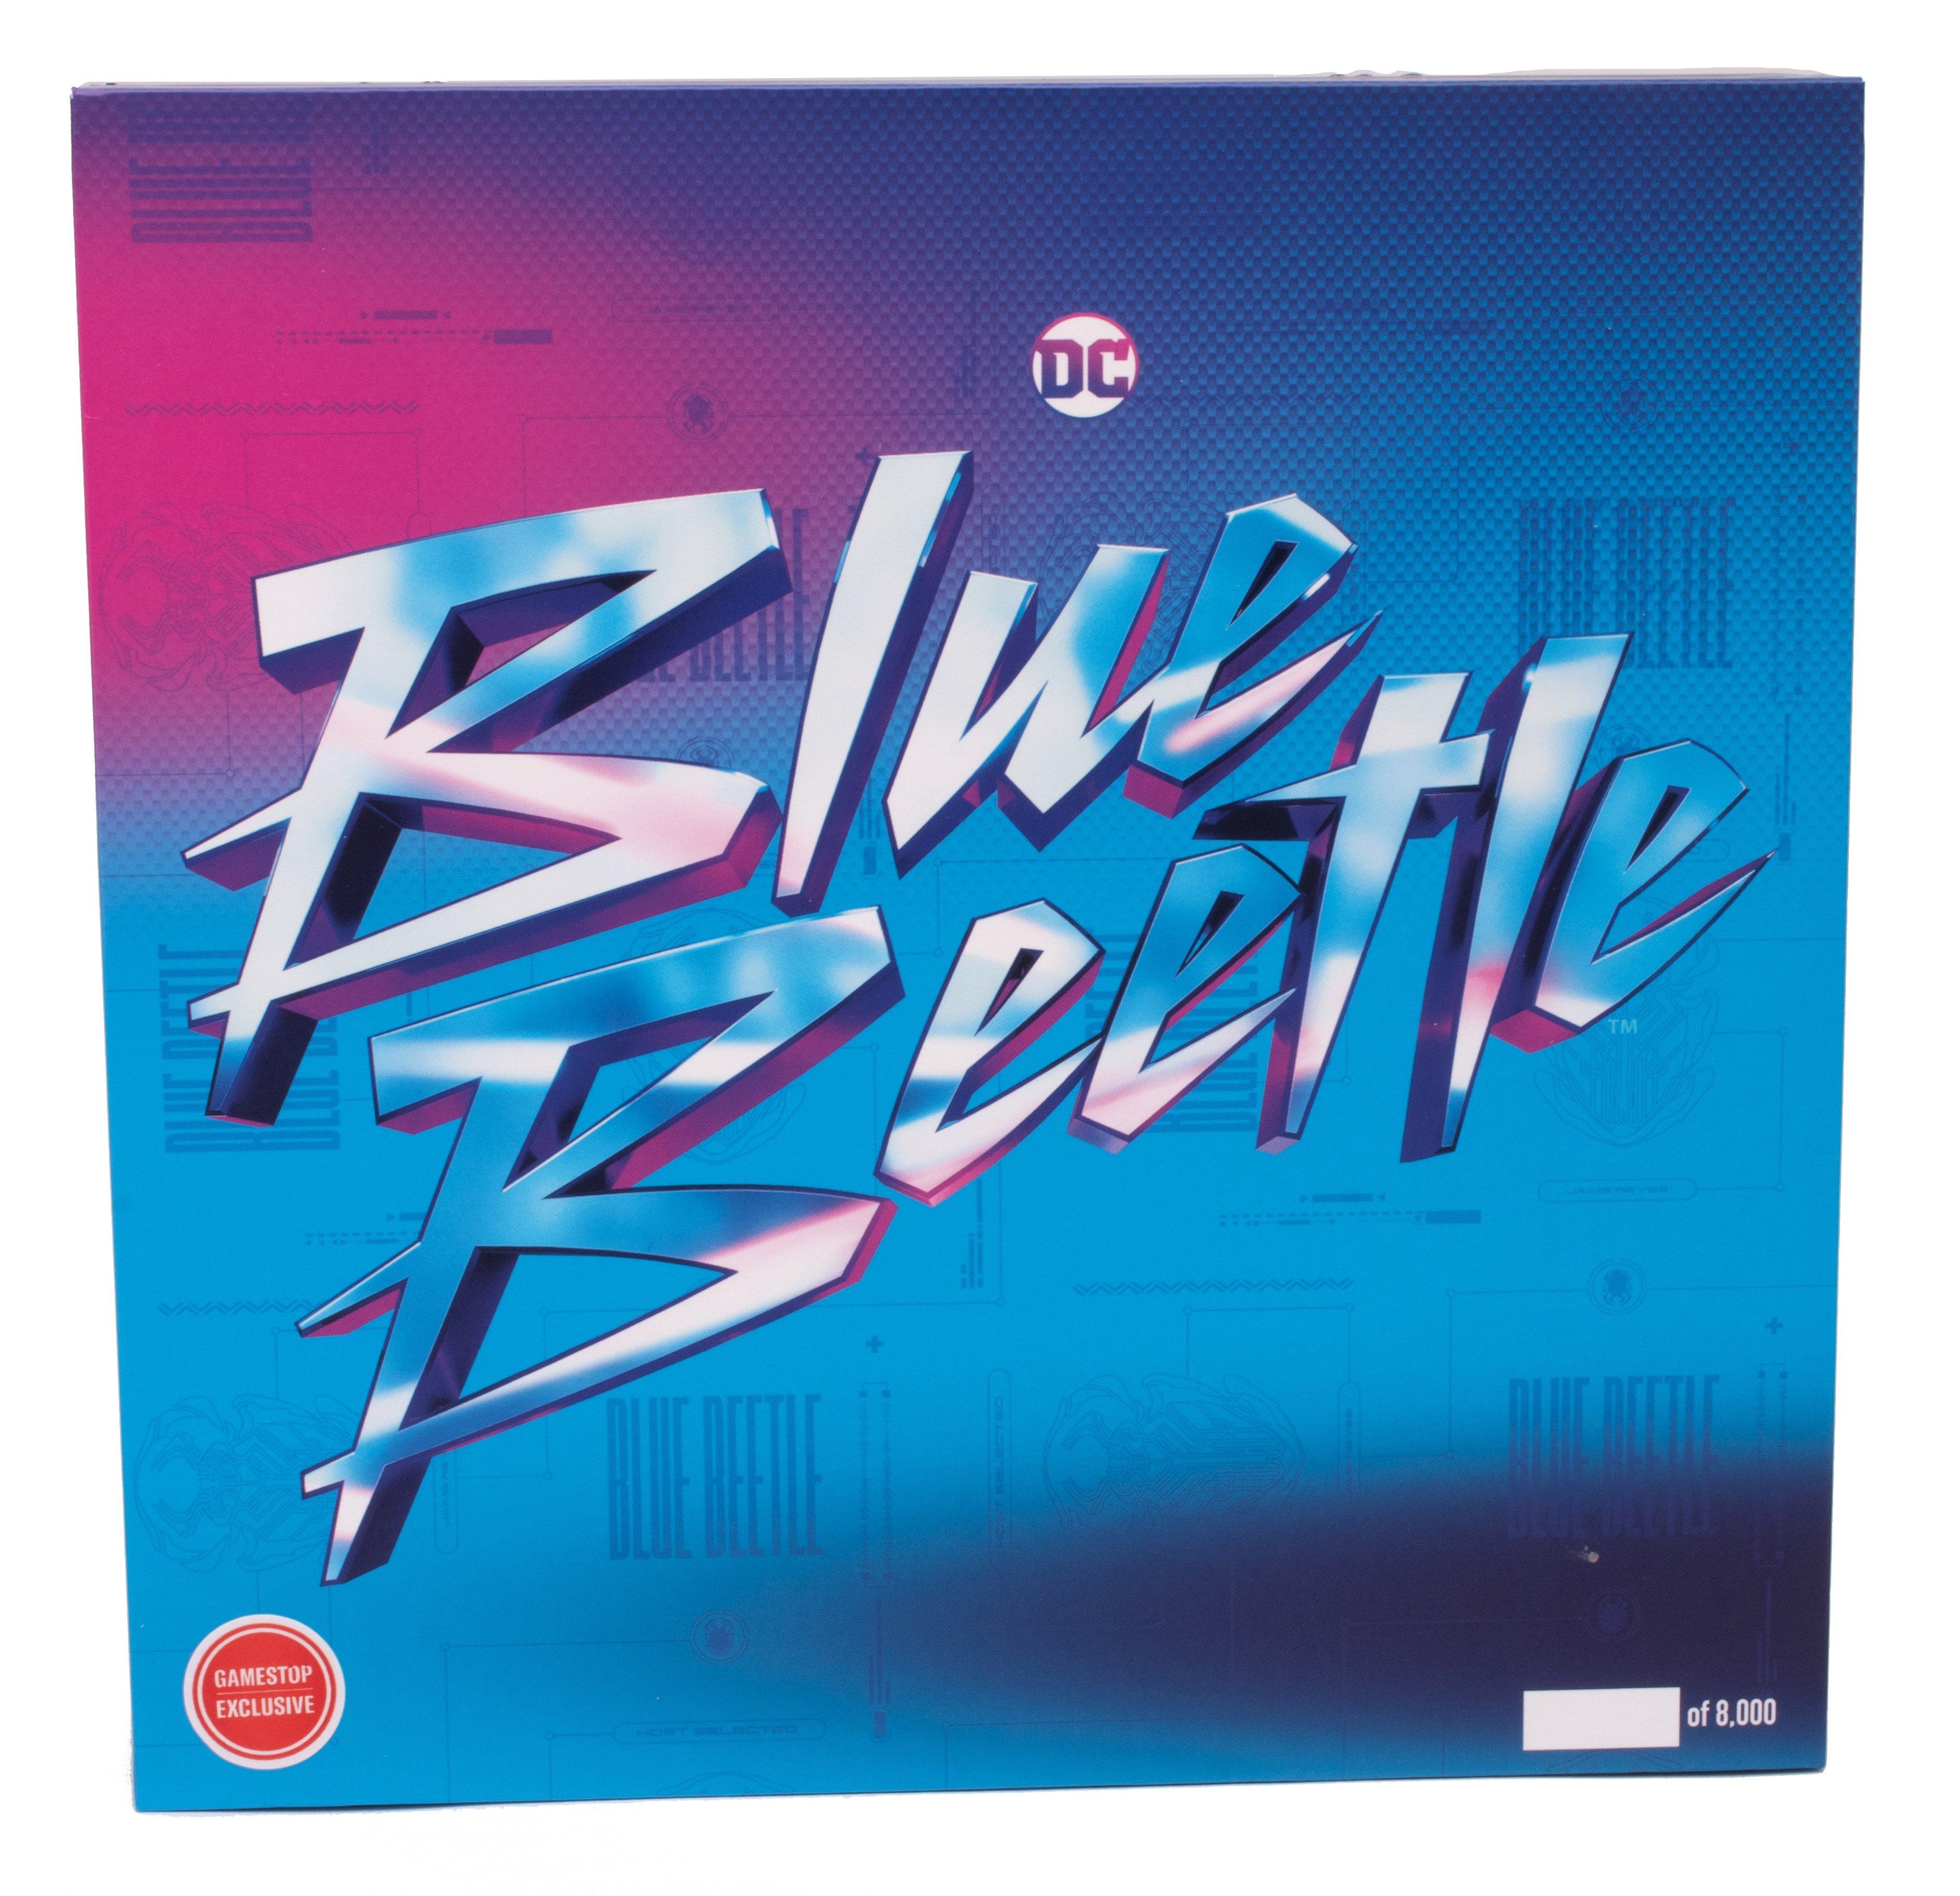 Punch buggy blue! DC set to unleash Blue Beetle - JB Hi-Fi